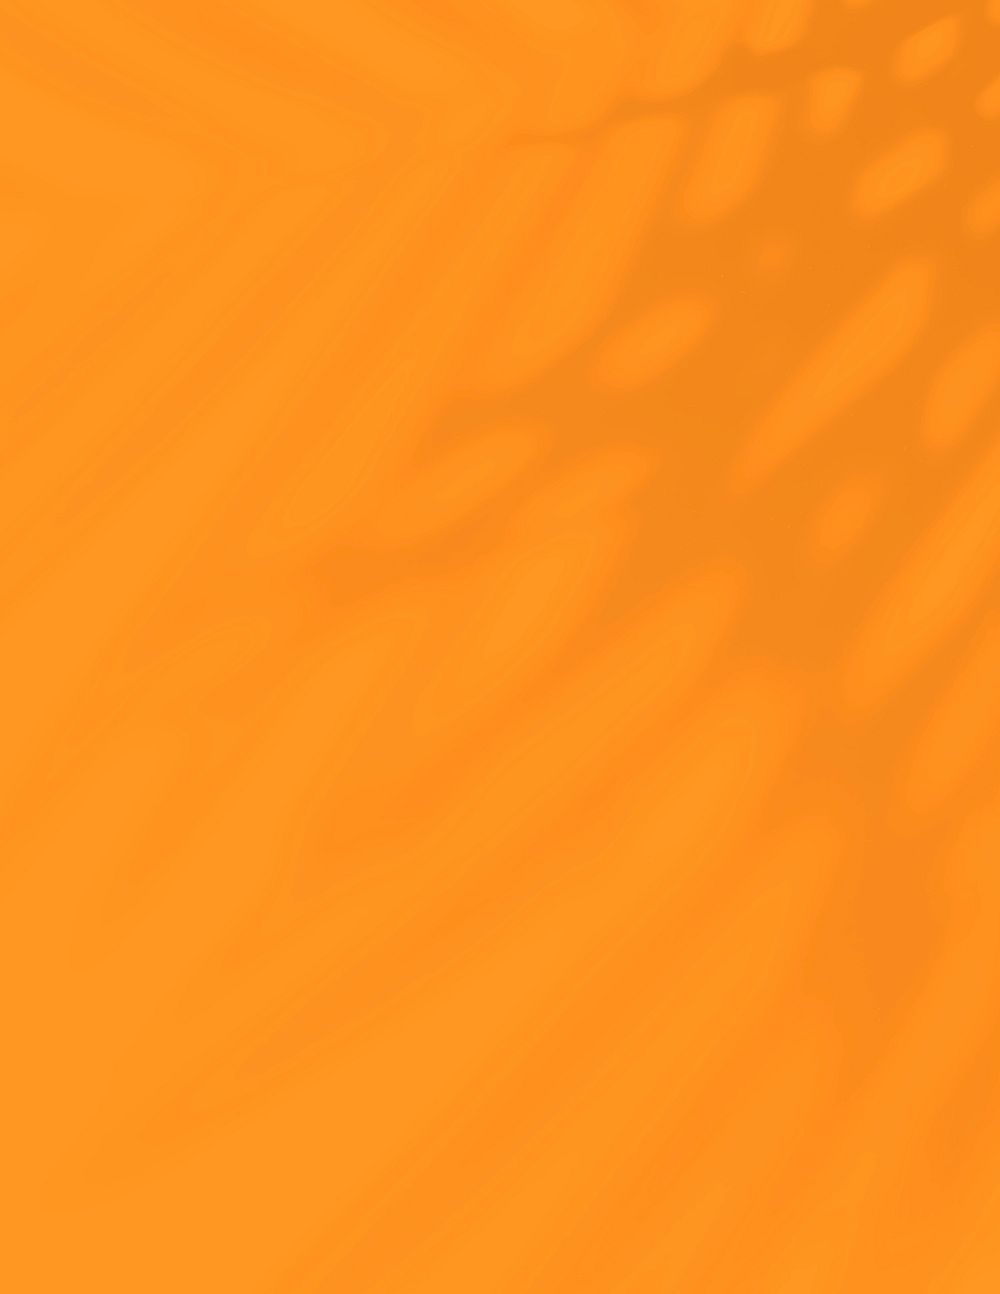 Orange background, leaf shadow design